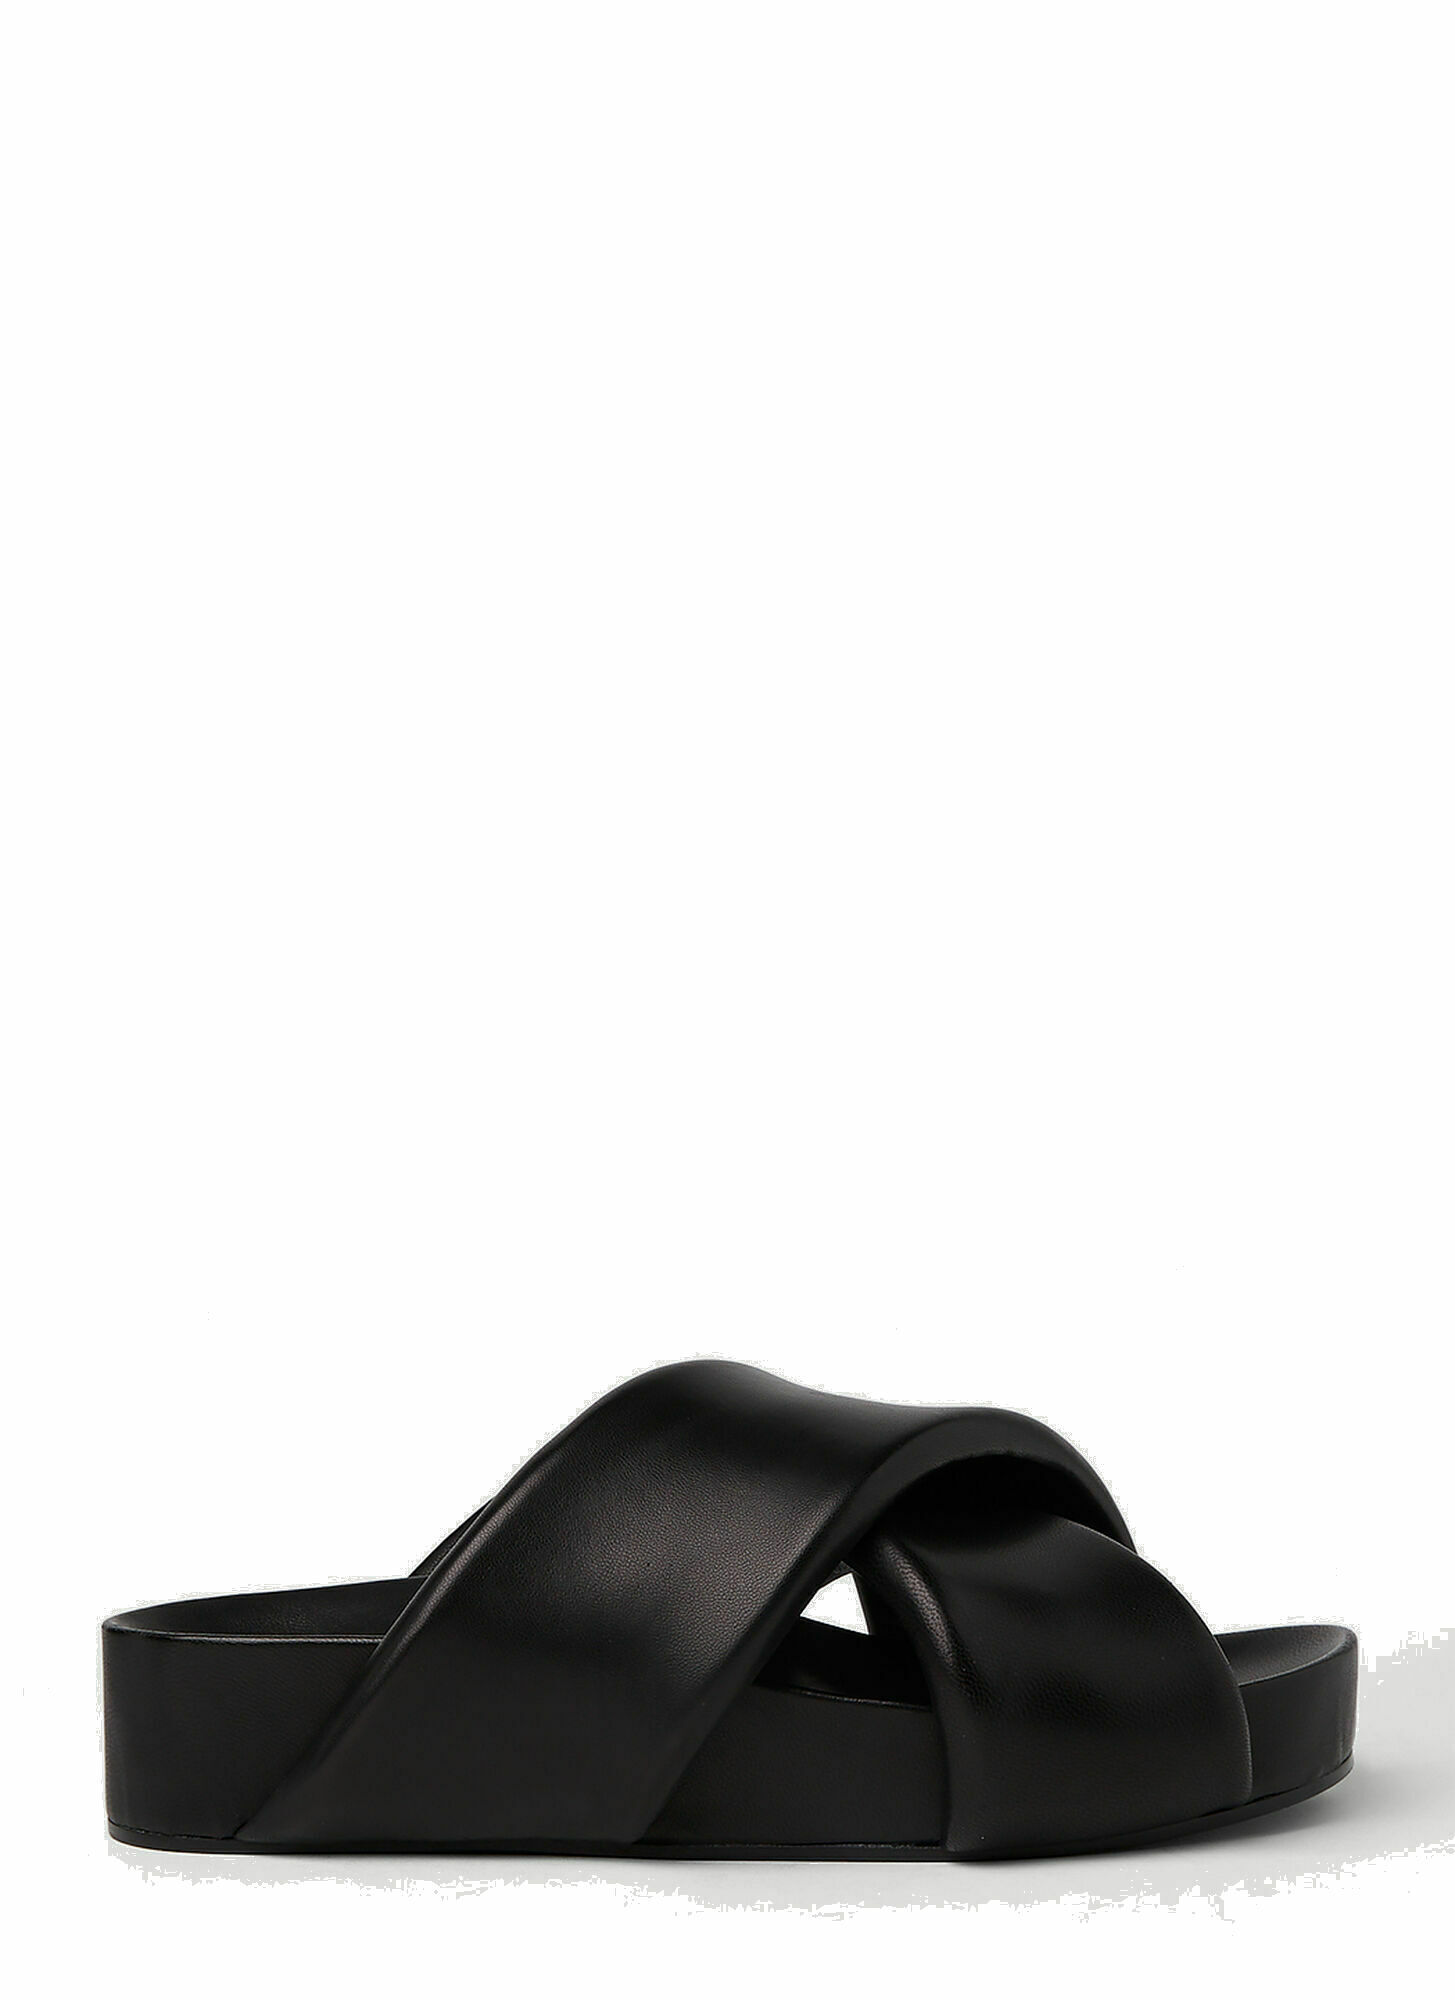 Padded Sandals in Black Jil Sander